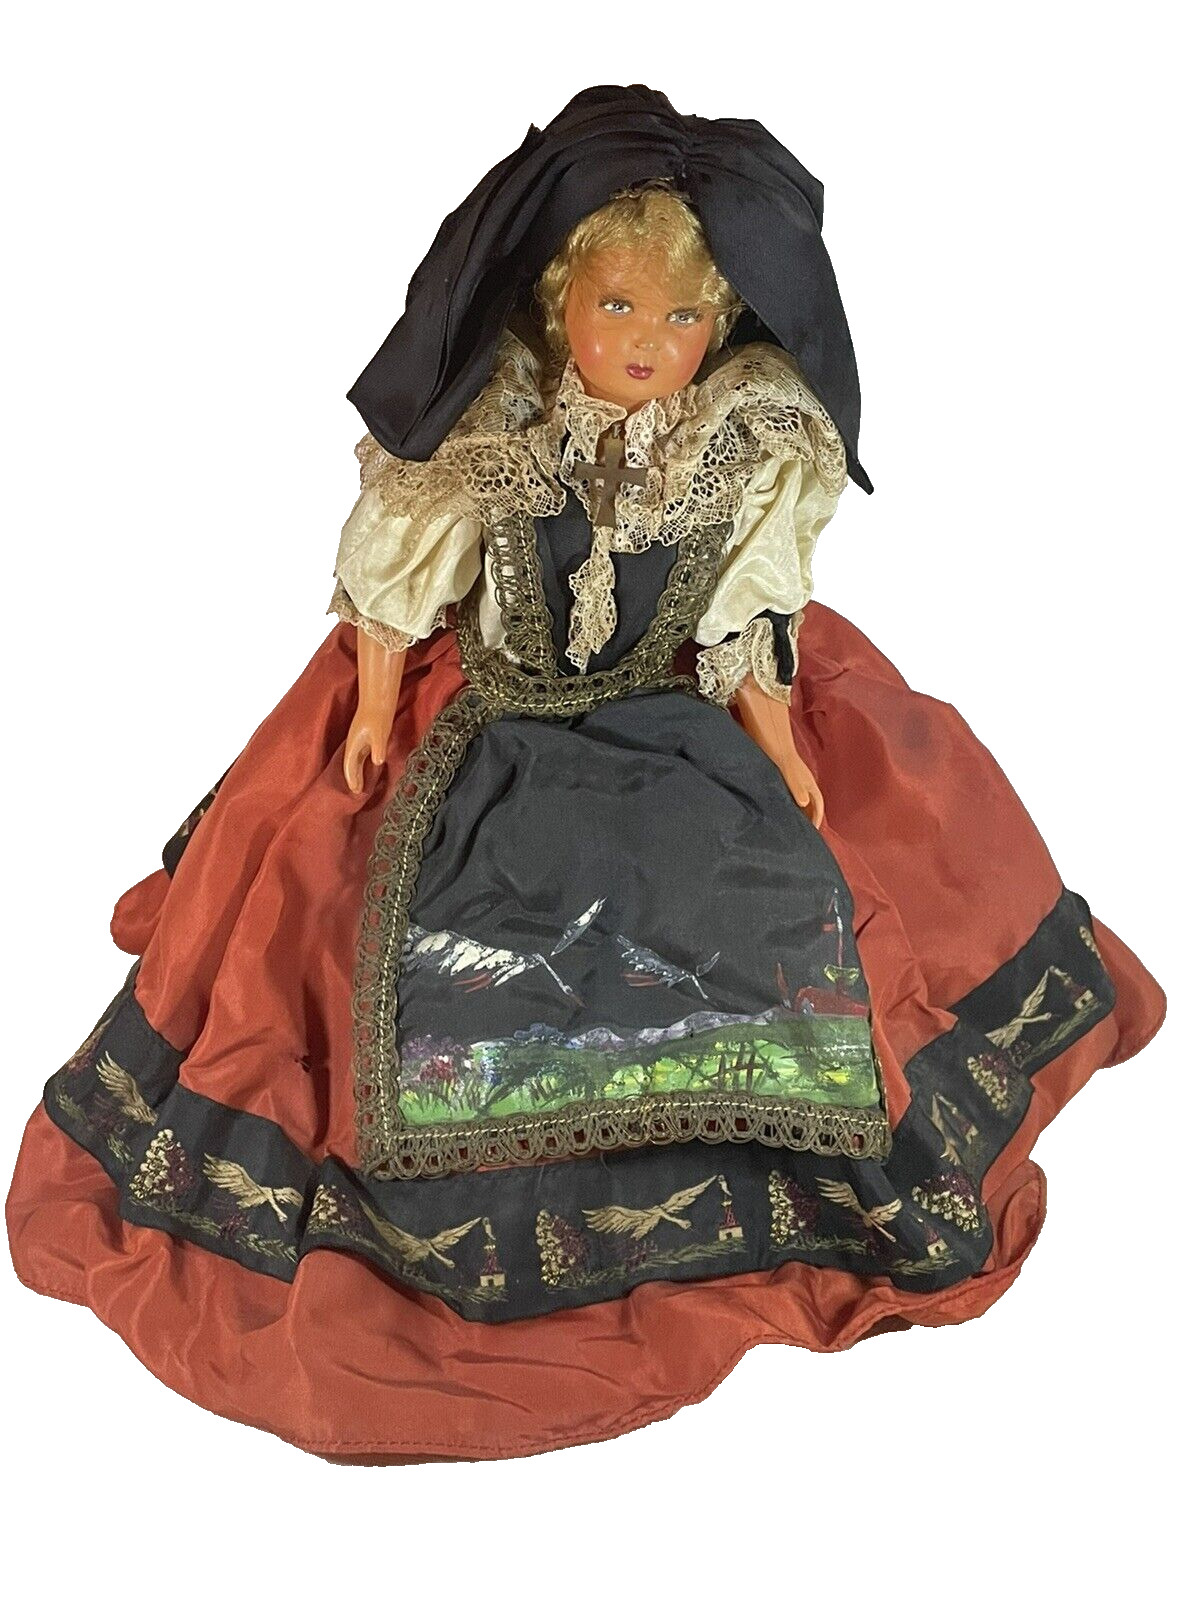 French Celluloid Doll Dress Costume Ethnic Doll La Nicoise Poupees Dress Alsace